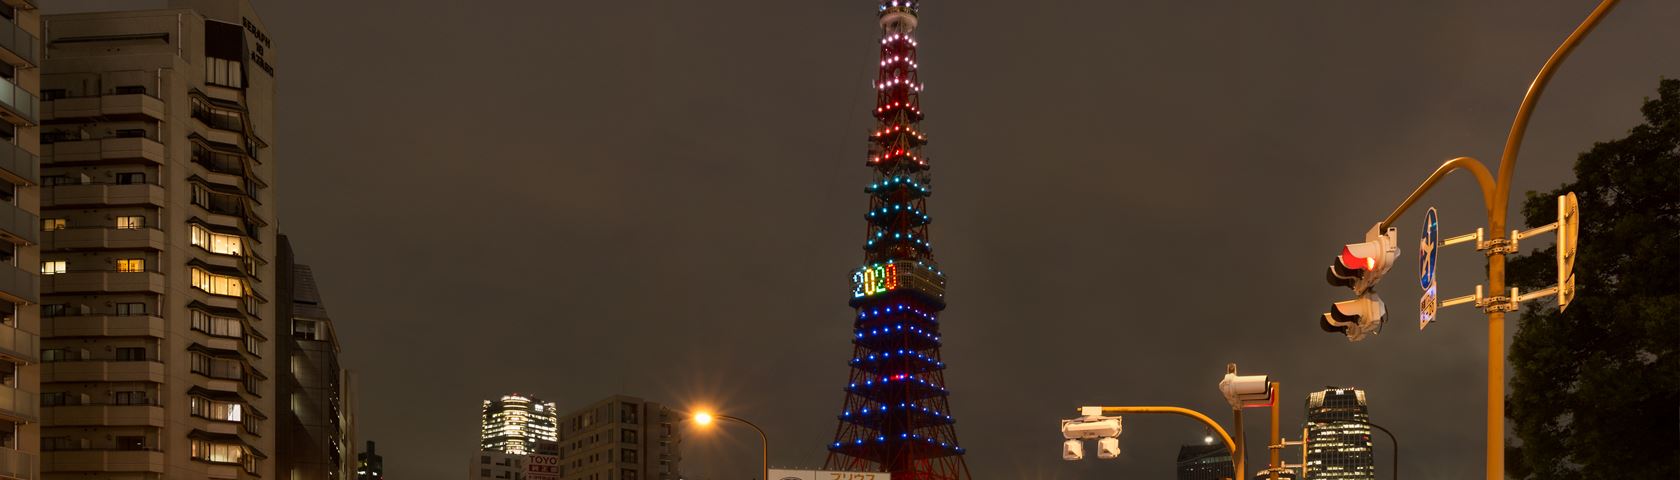 Tokyo Tower 2020 Lighting